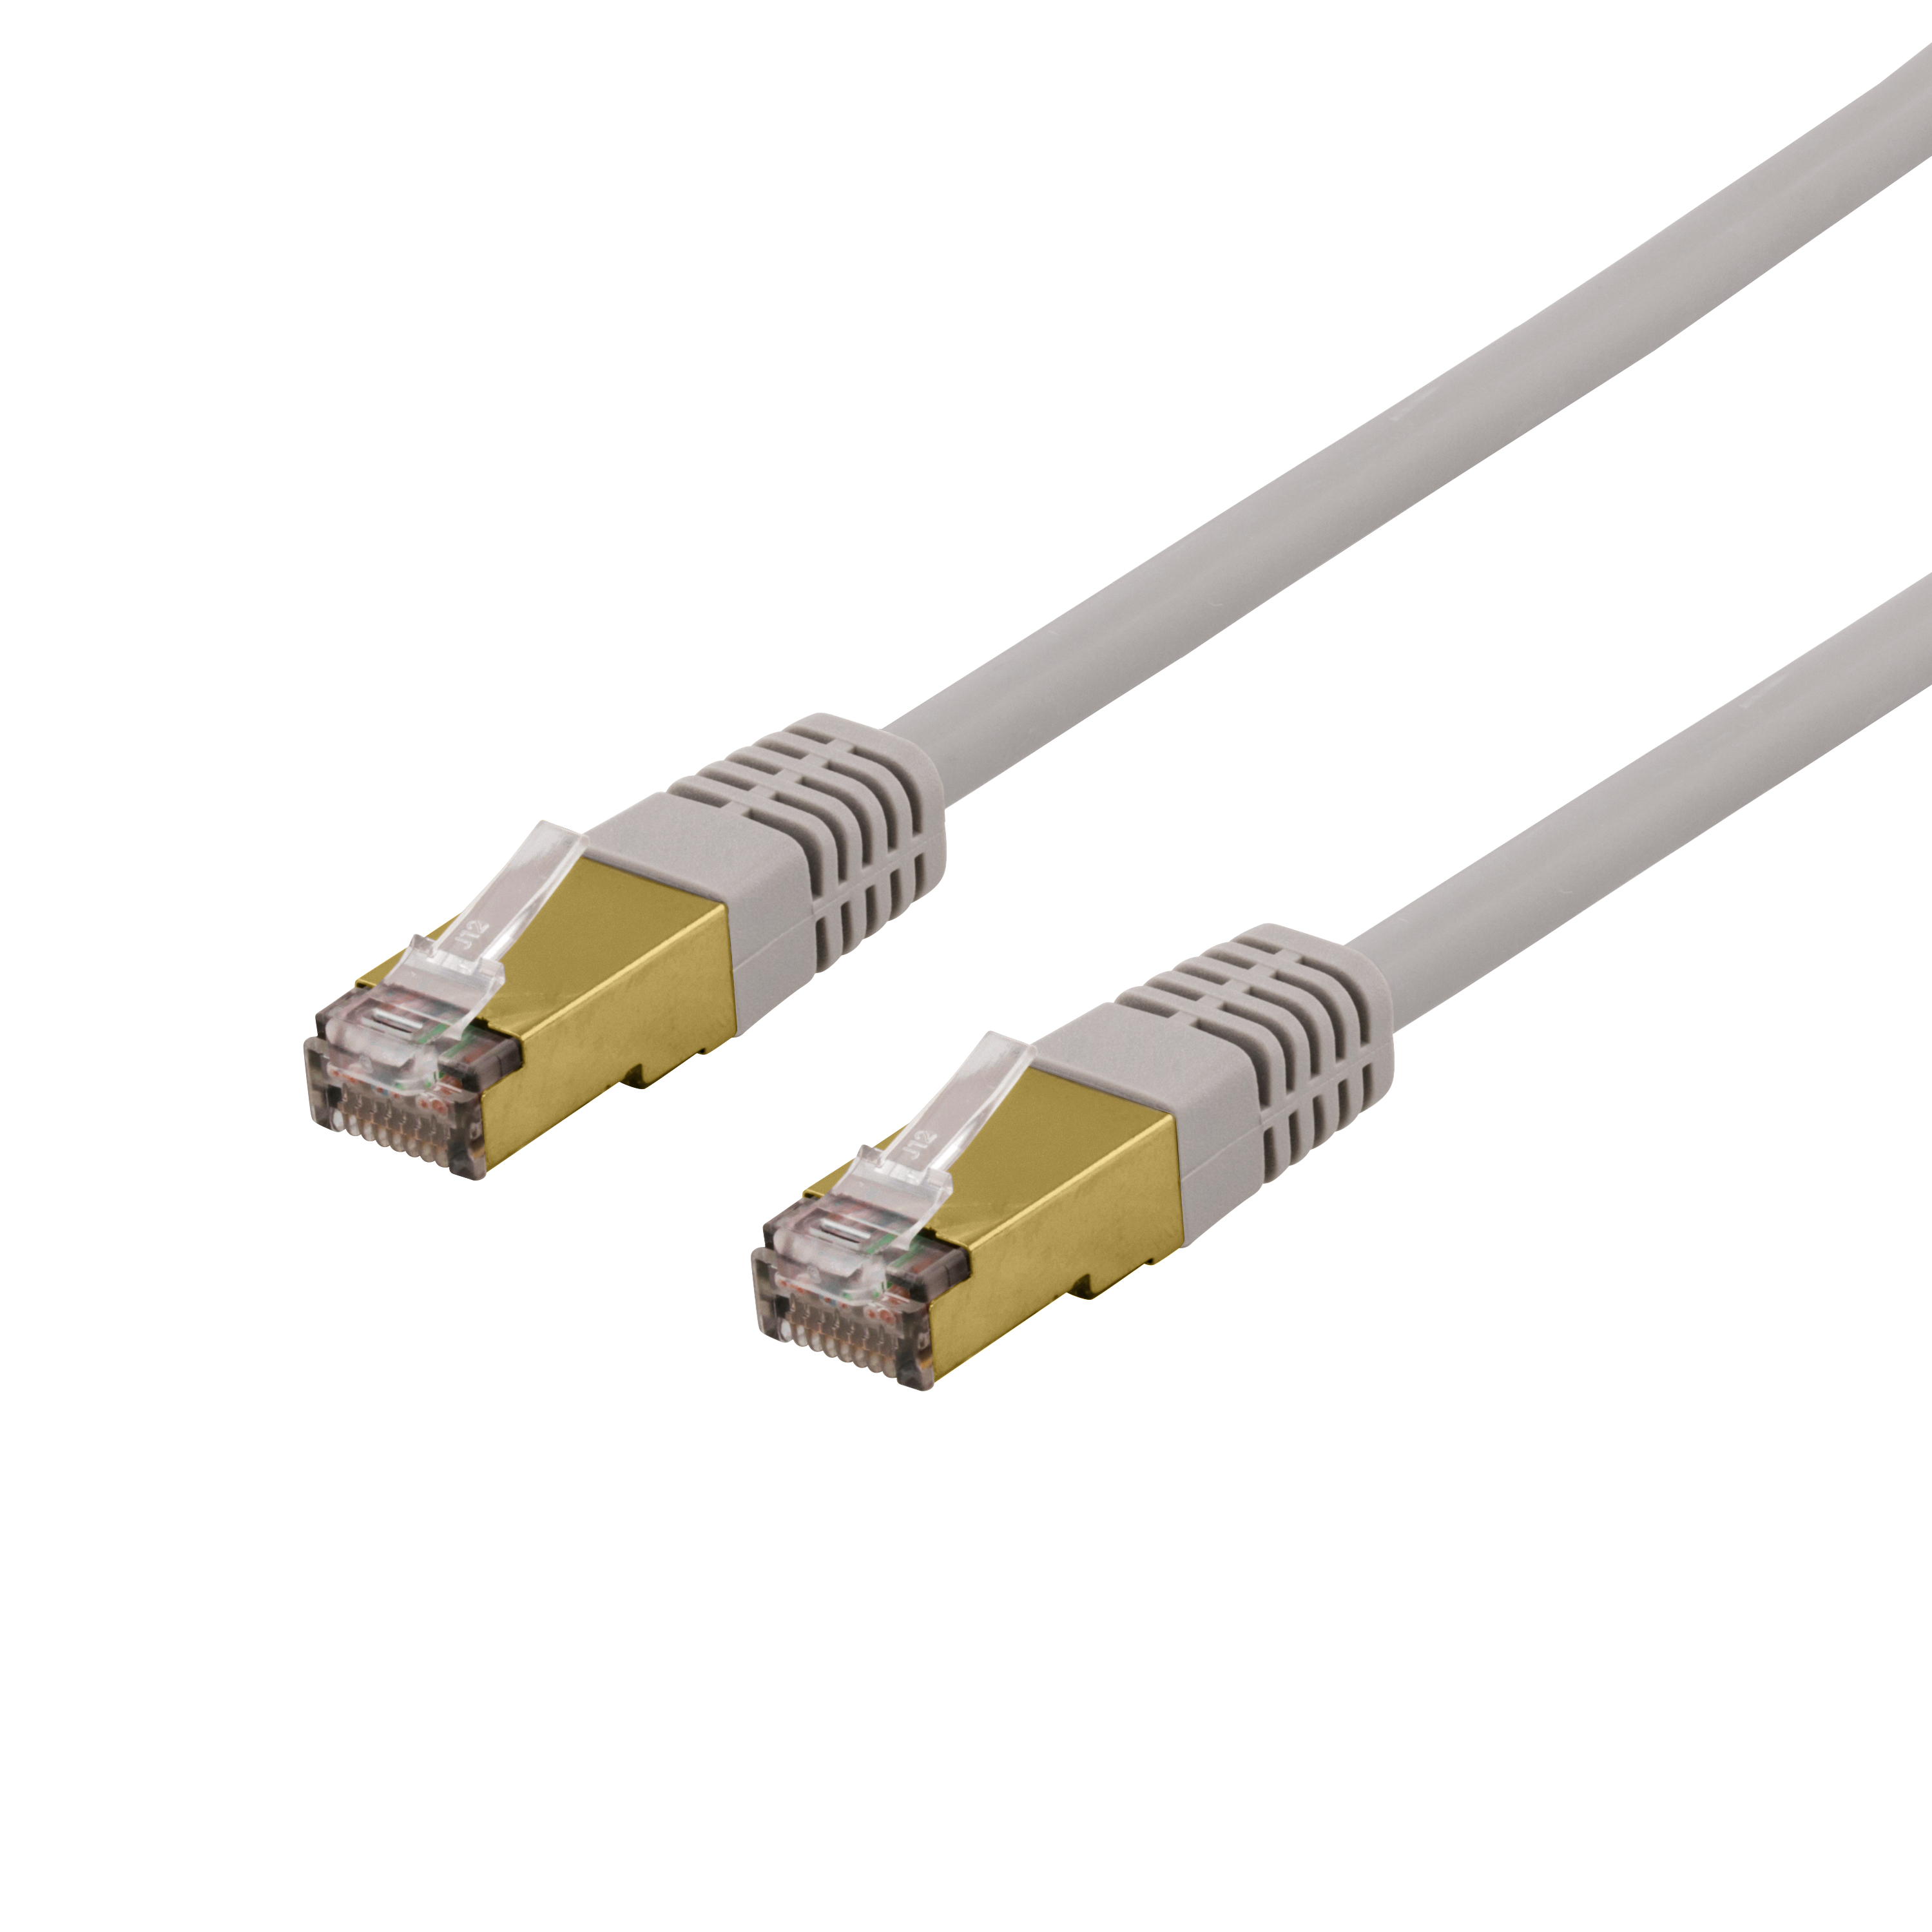 Cable DELTACO S / FTP Cat6a, delta certified, LSZH, 5m, grey / SFTP-65AH